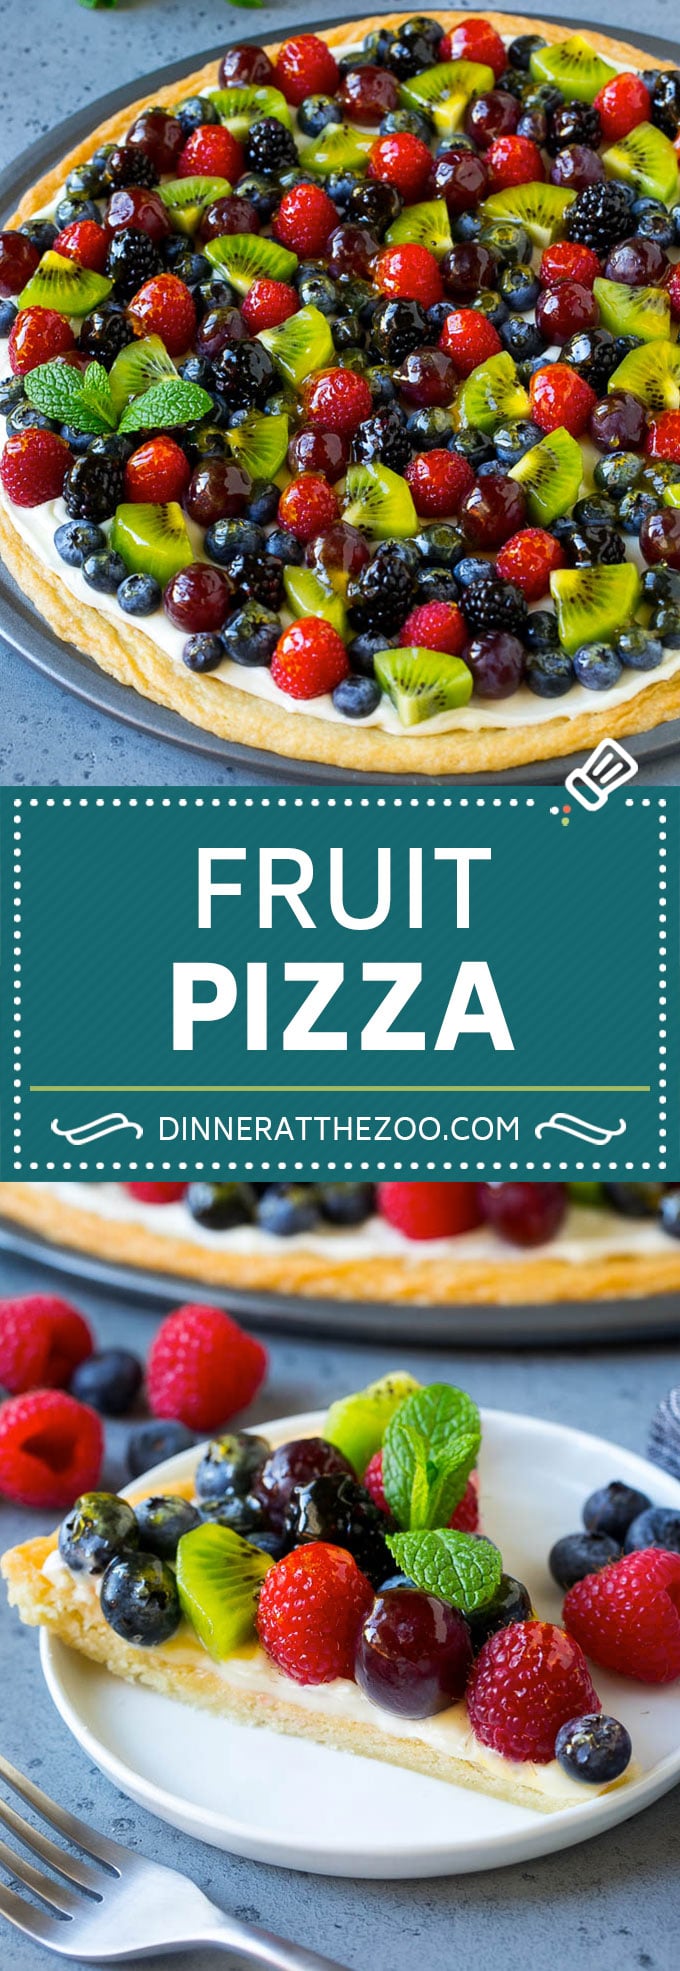 Fruit Pizza Recipe | Dessert Pizza | Fruit Dessert #cookie #fruit #pizza #dessert #sweets #dinneratthezoo